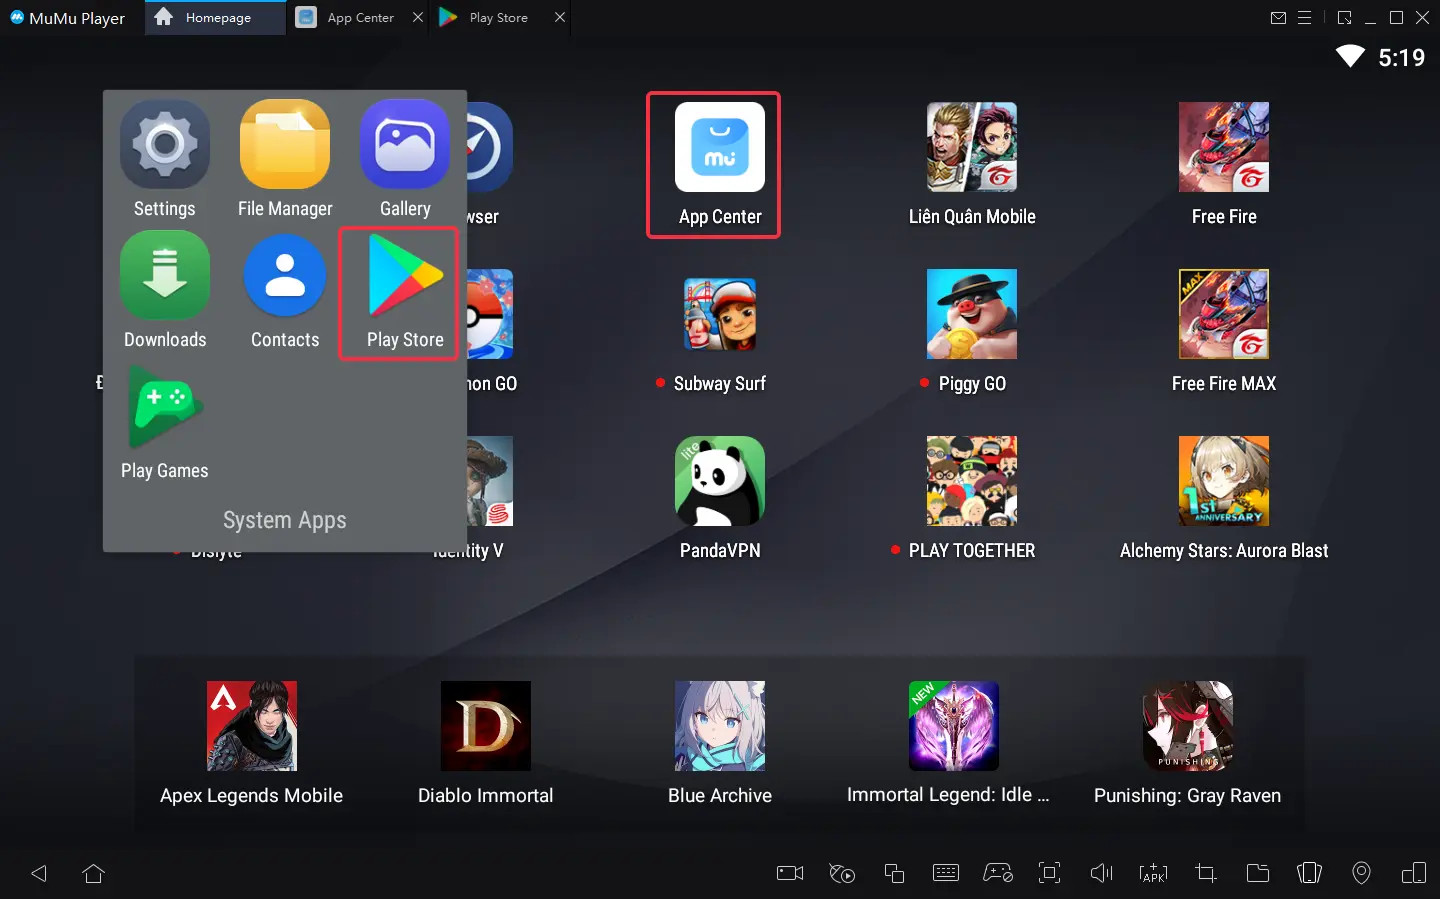 Download & Play Dragon Raja on PC & Mac (Emulator)